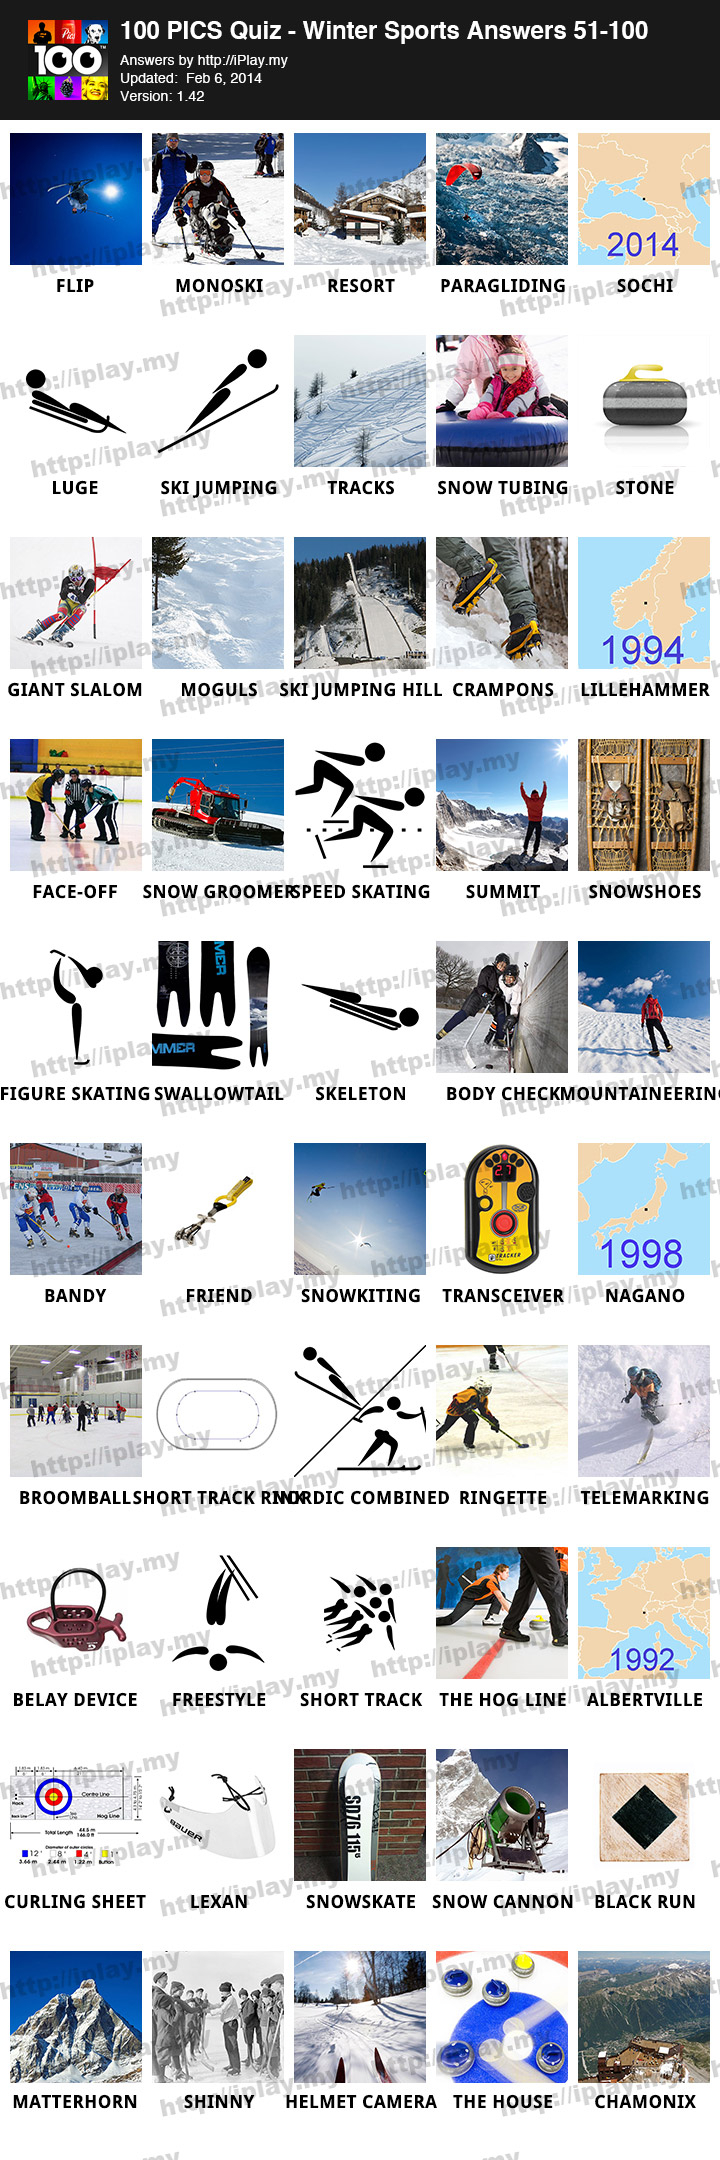 100 Pics Winter Sports Answers IPlay my